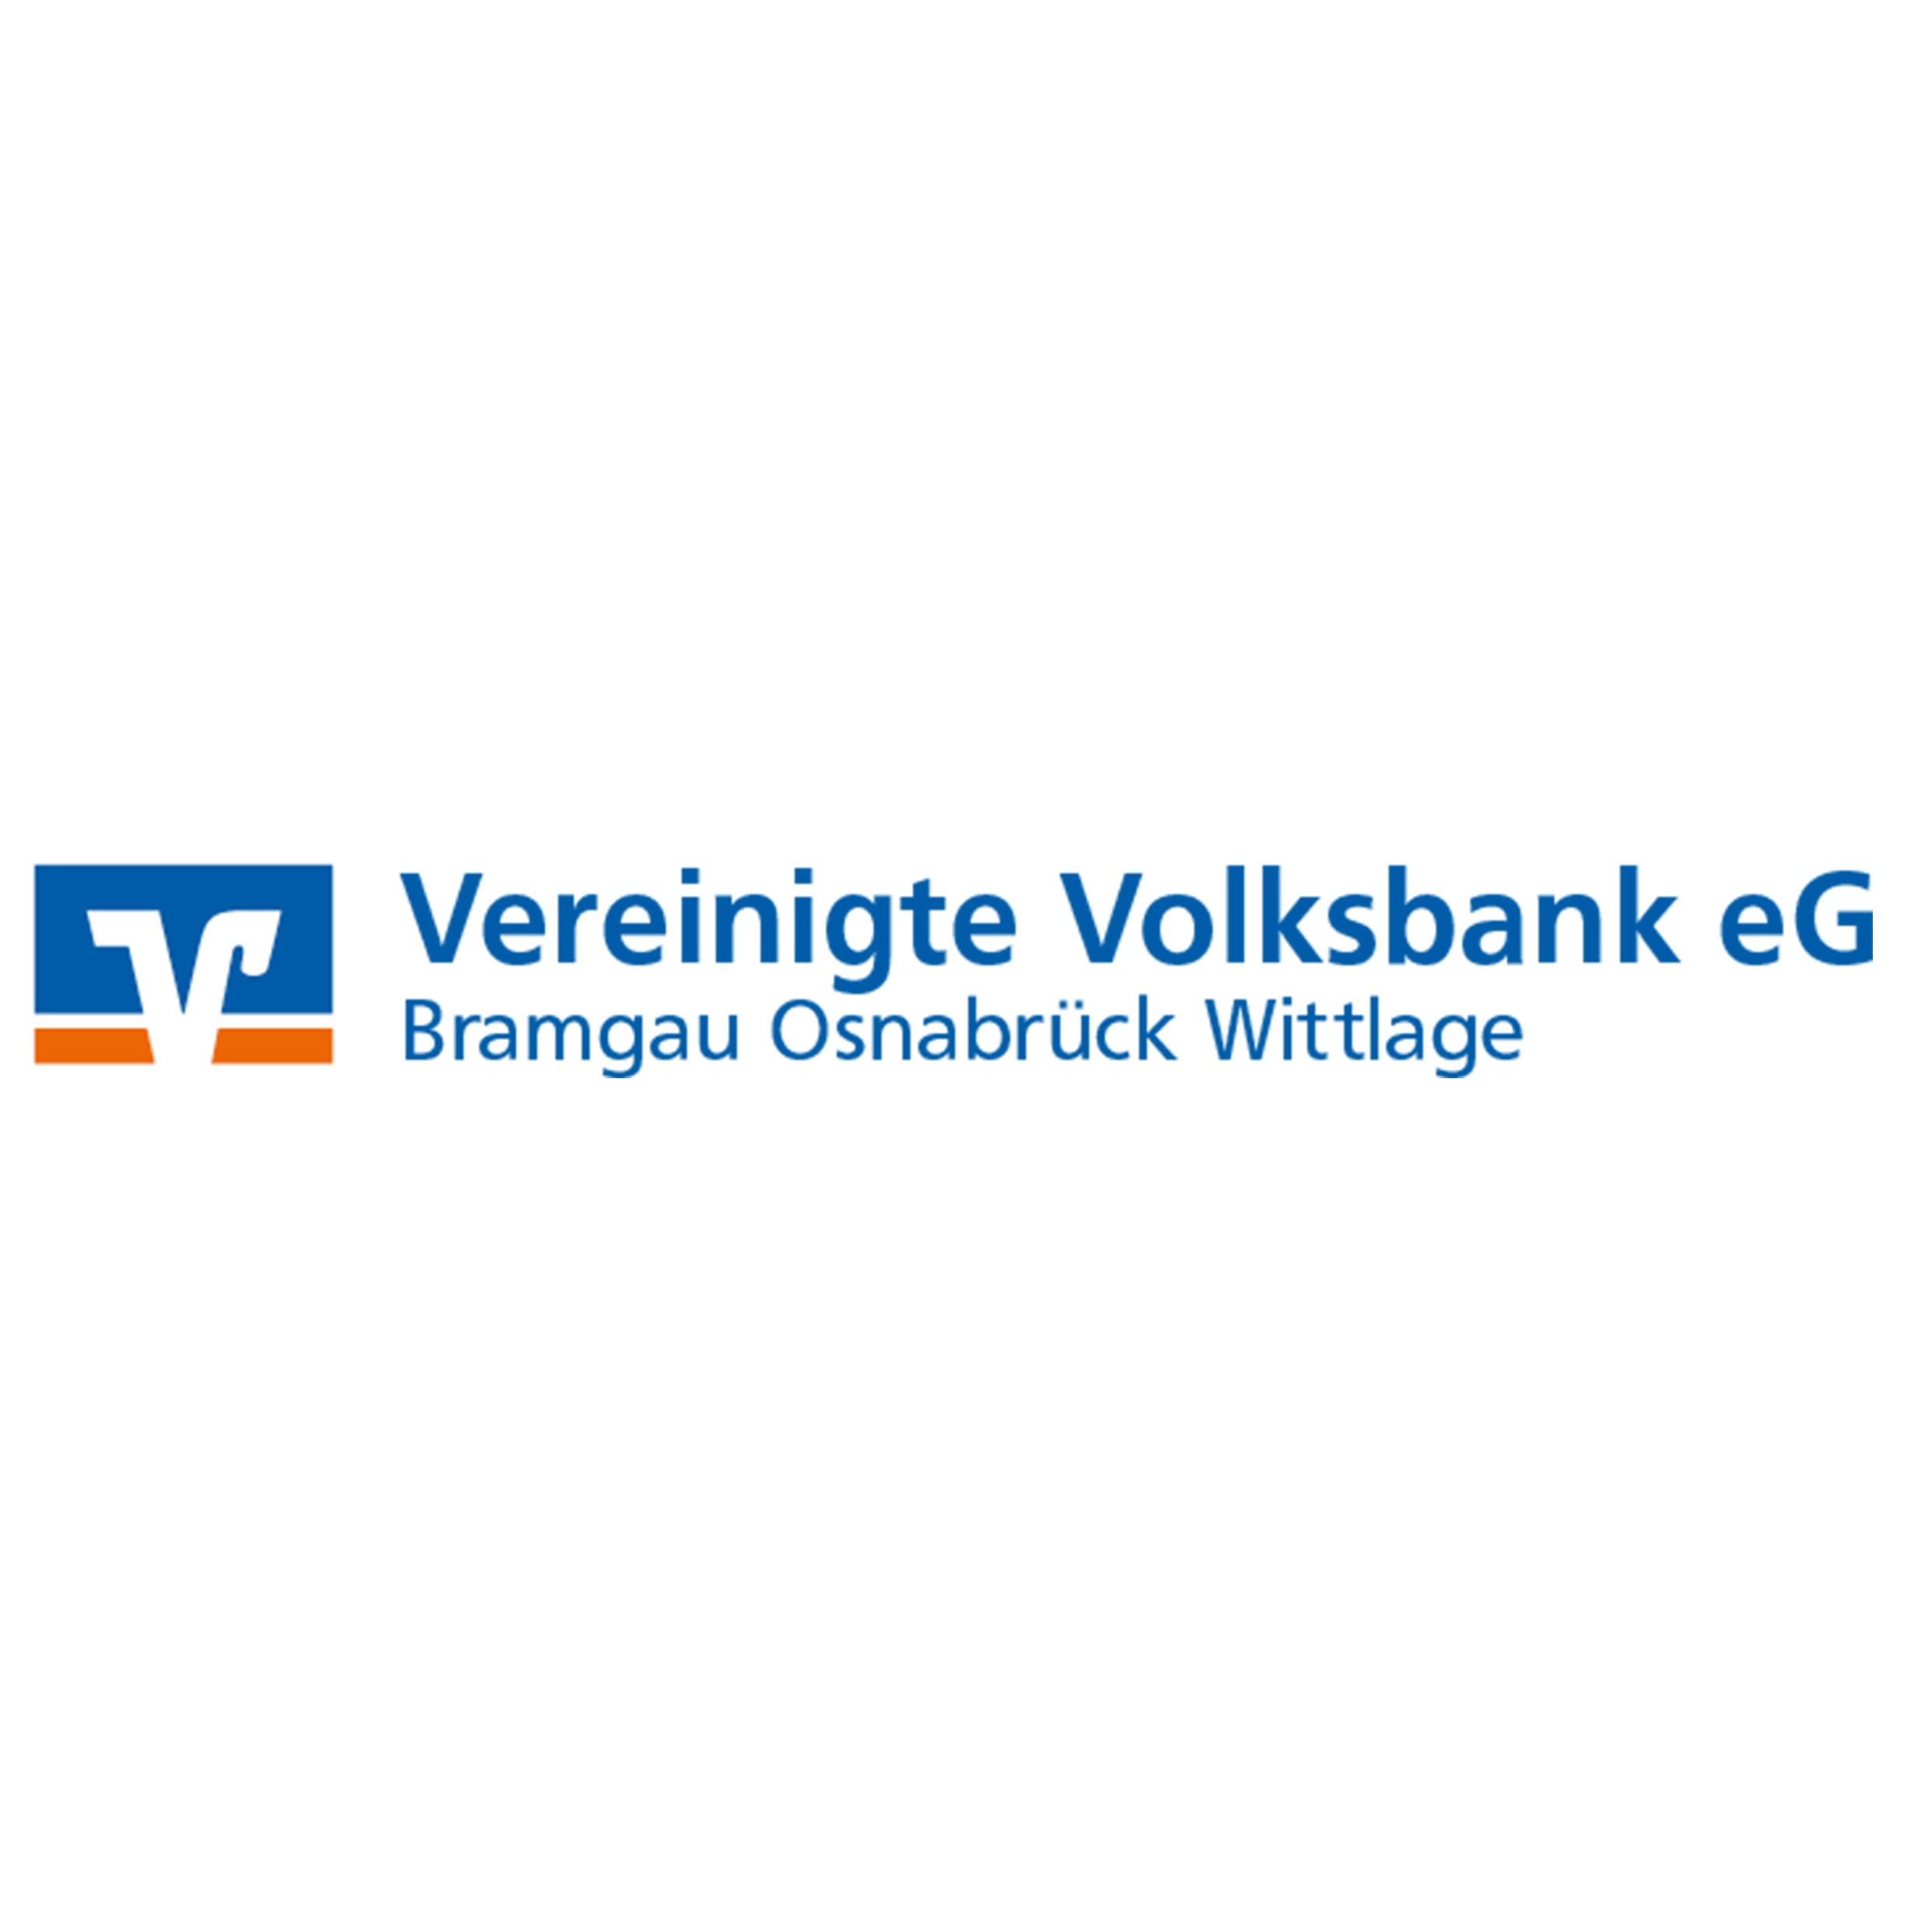 Vereinigte Volksbank eG Bramgau Osnabrück Wittlage in Osnabrück - Logo